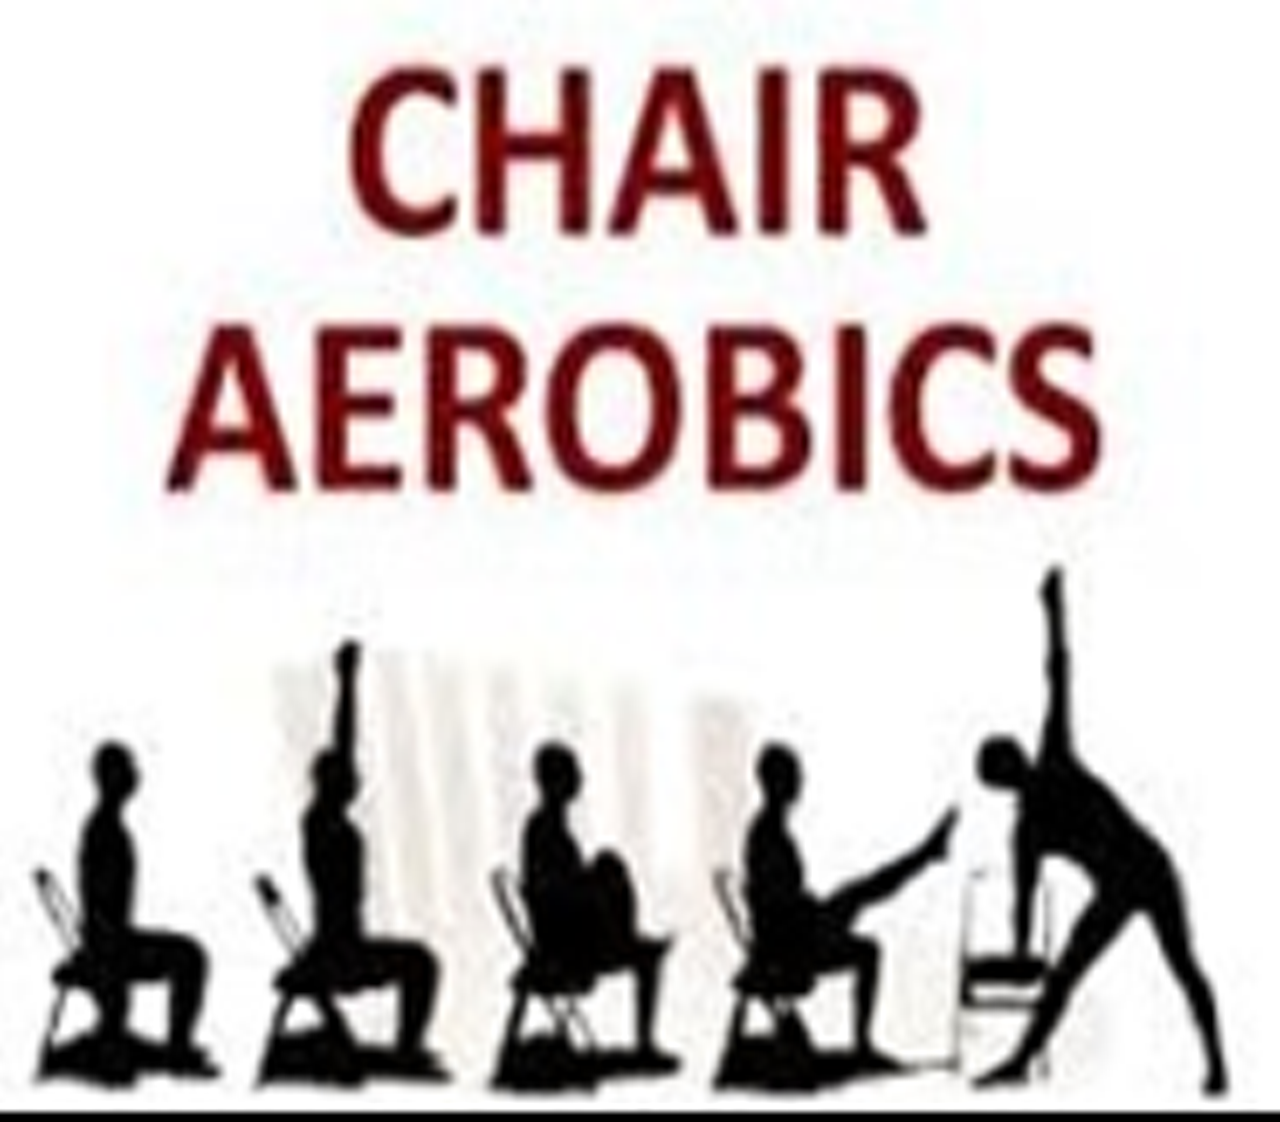 Chair aerobics for seniors, Athens Christian Church